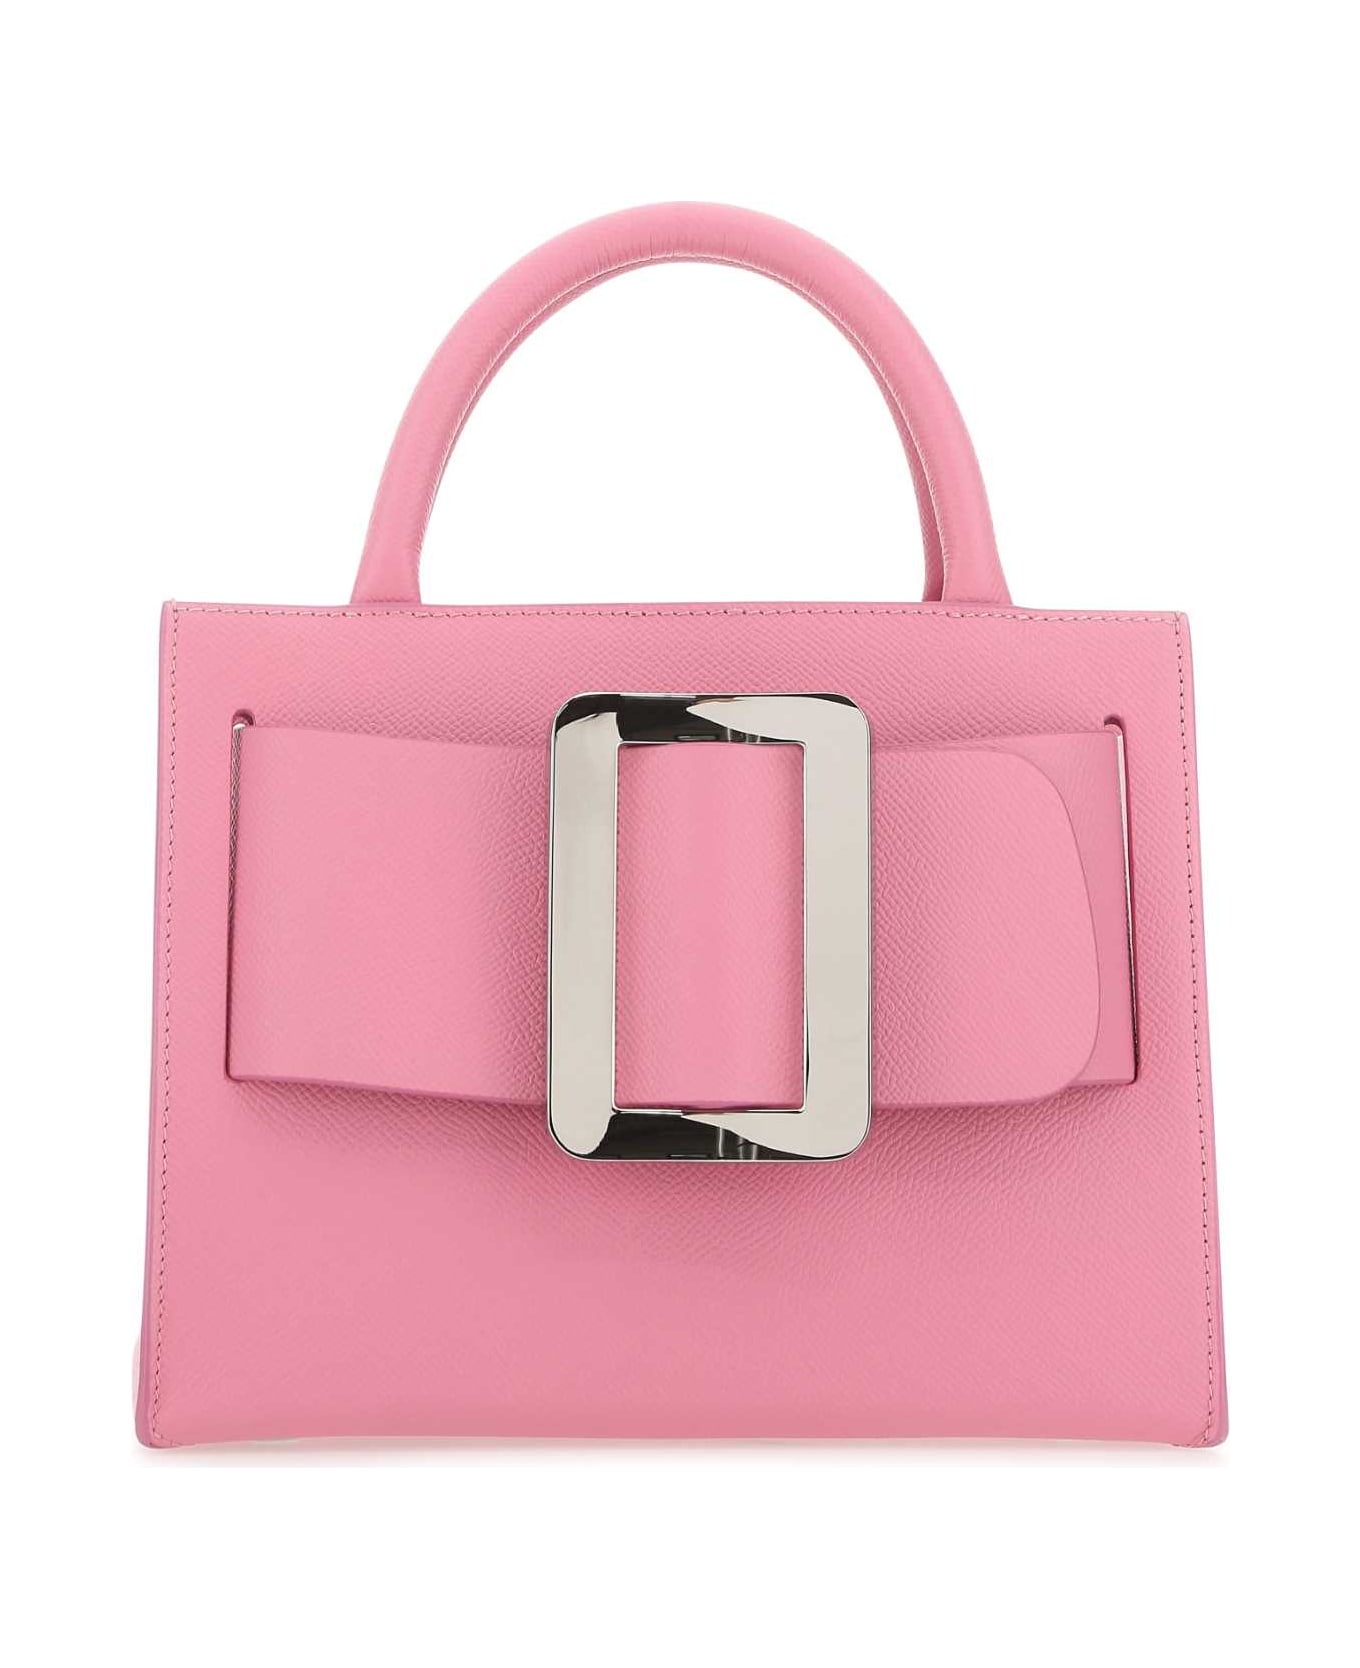 BOYY Pink Leather Bobby 23 Handbag - BUBGUM